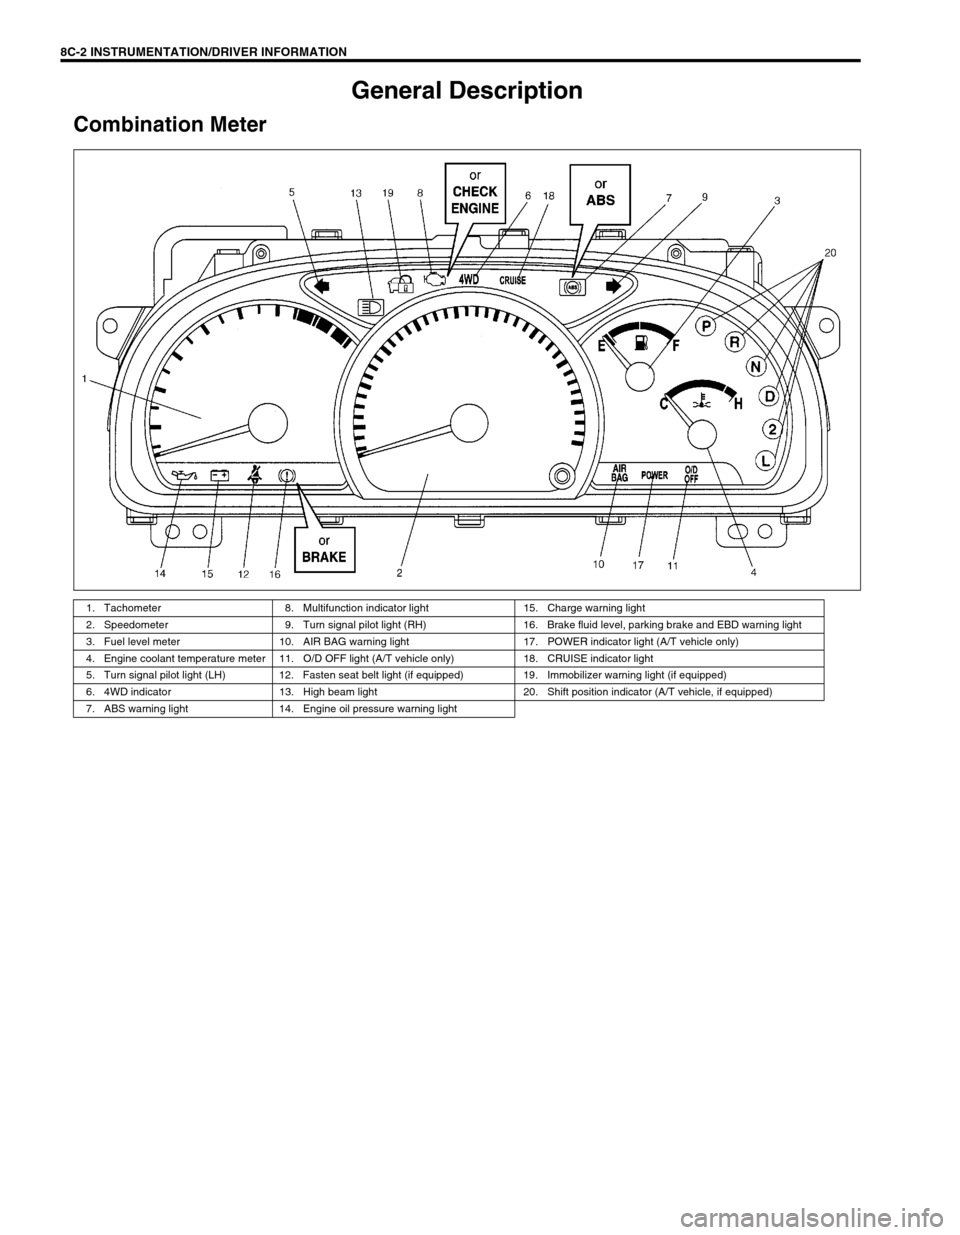 SUZUKI GRAND VITARA 2001 2.G Manual PDF 8C-2 INSTRUMENTATION/DRIVER INFORMATION
General Description
Combination Meter
1. Tachometer 8. Multifunction indicator light 15. Charge warning light
2. Speedometer 9. Turn signal pilot light (RH) 16.